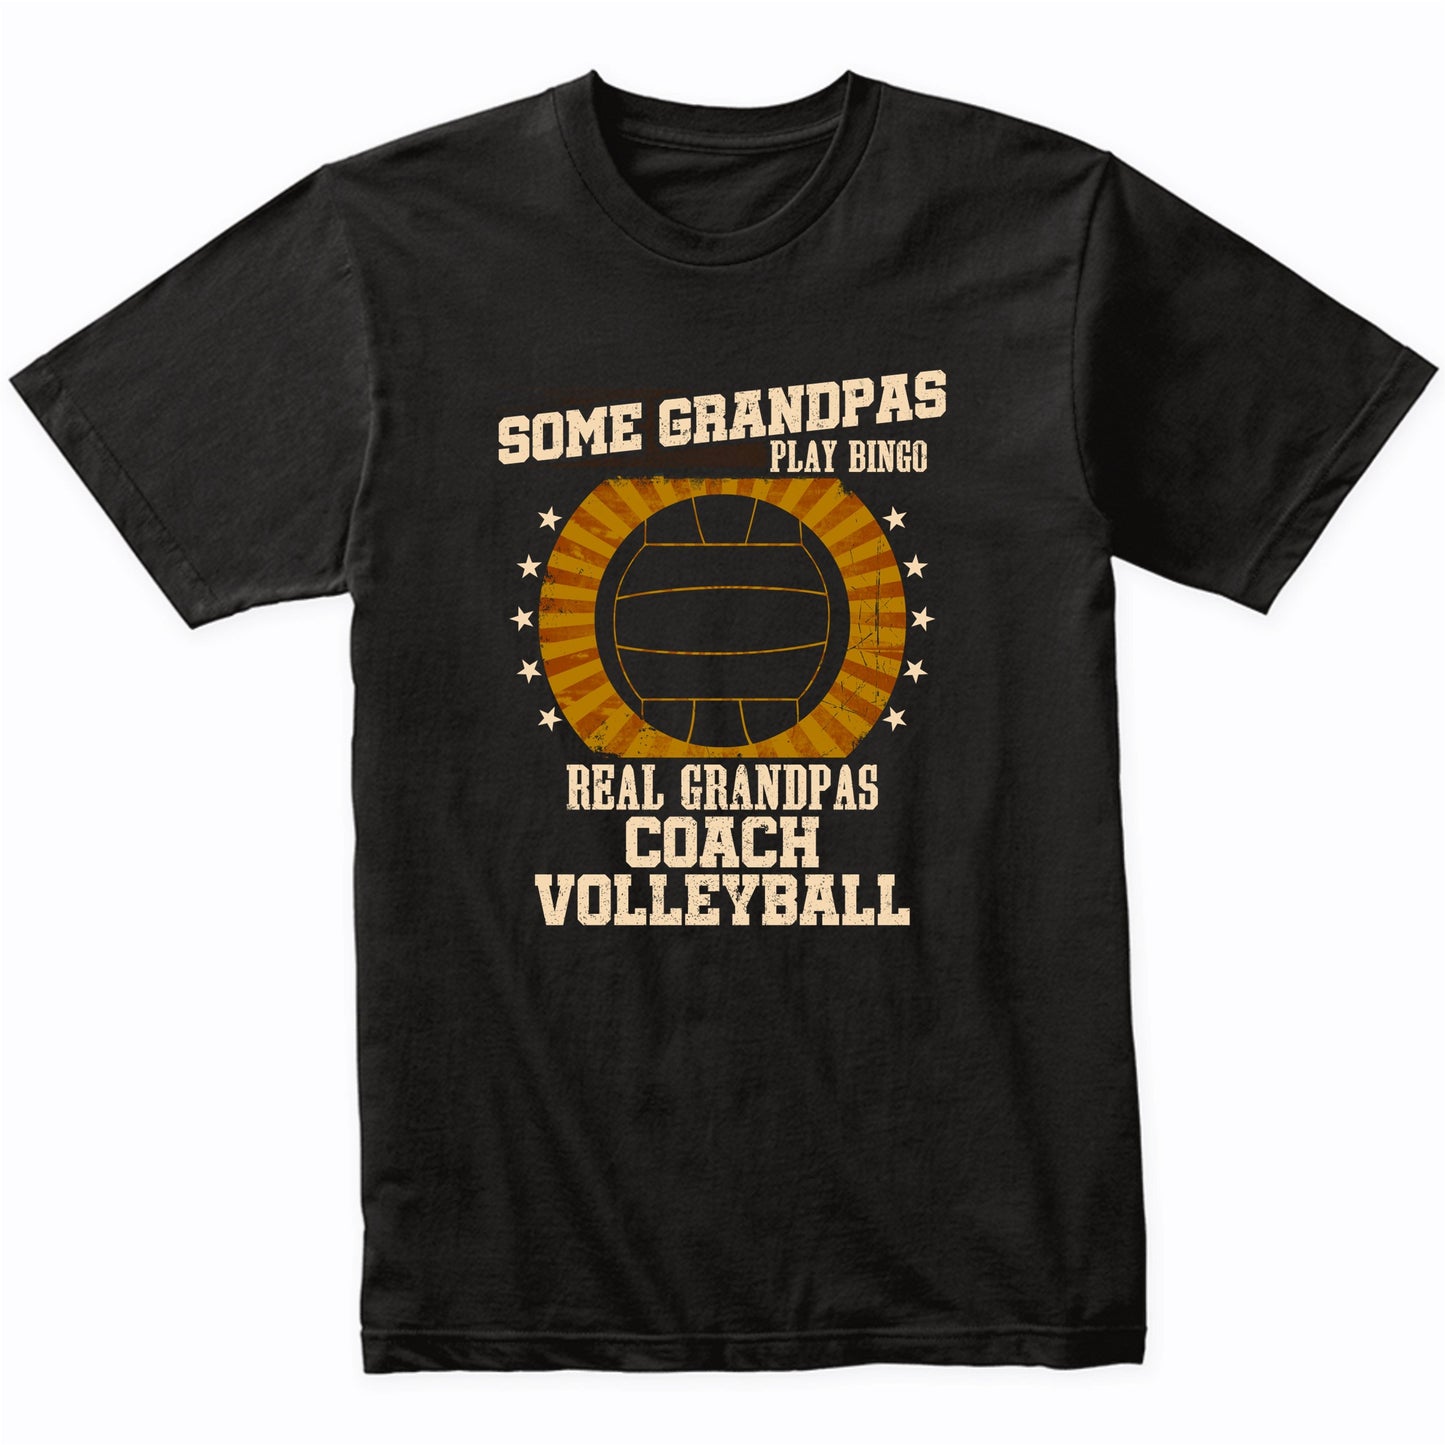 Volleyball Grandpa Shirt - Real Grandpas Coach Volleyball T-Shirt